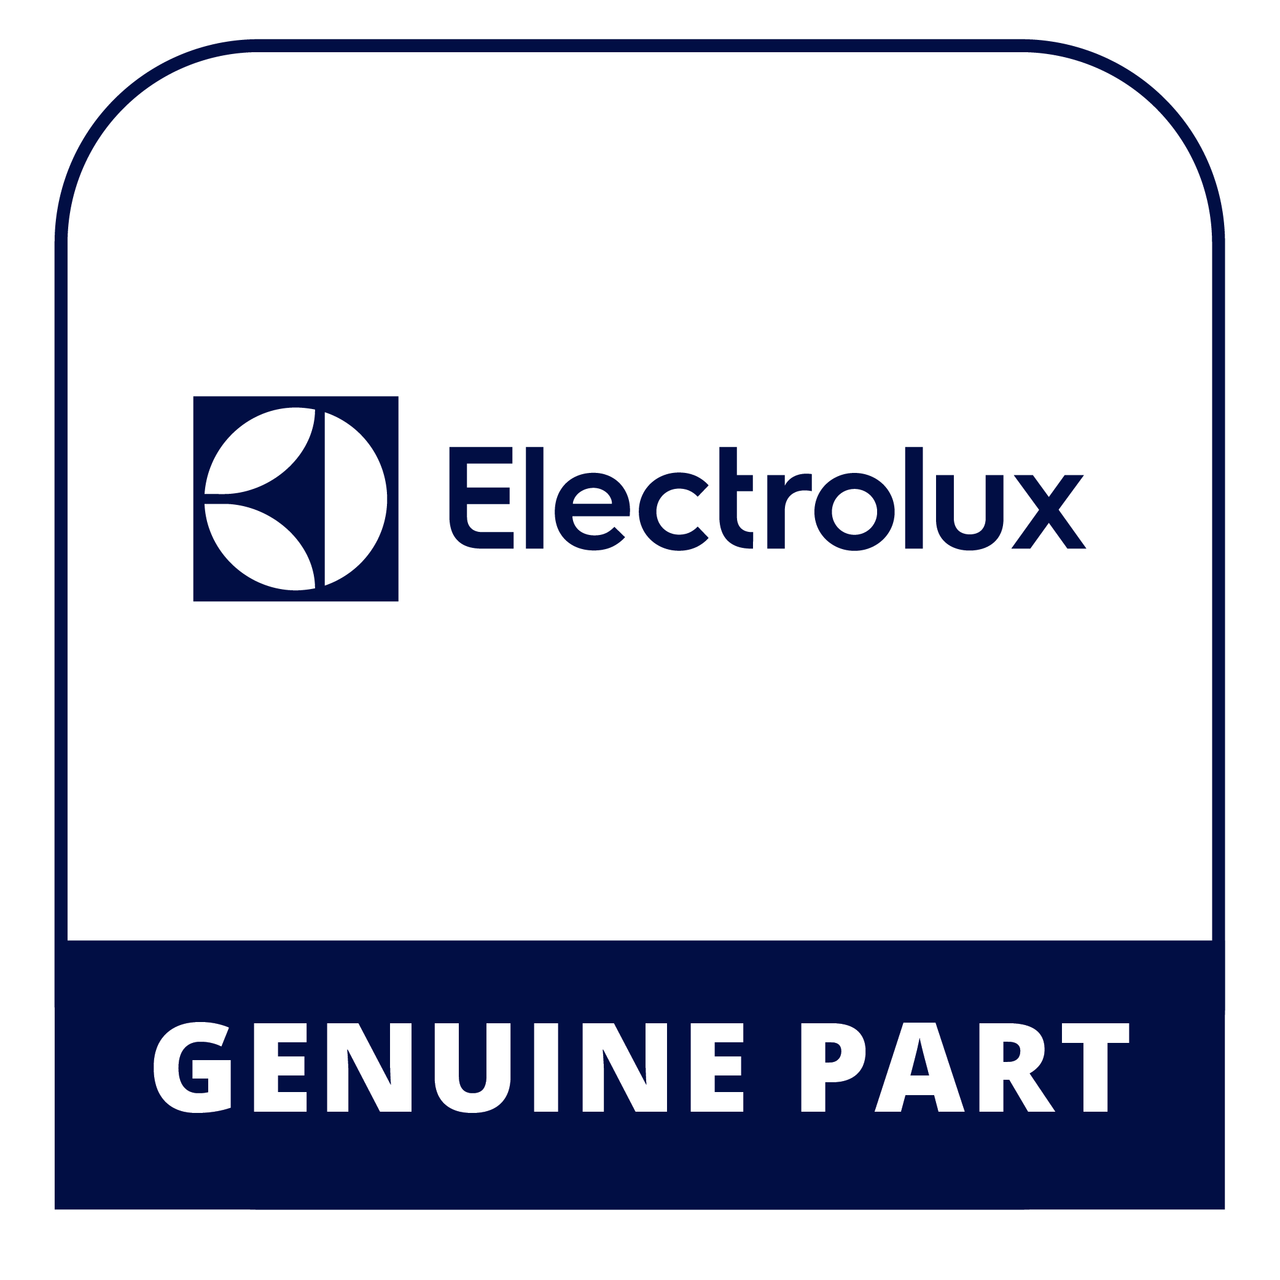 Frigidaire - Electrolux 5304497268 Insert For Sp Chrom - Genuine Electrolux Part